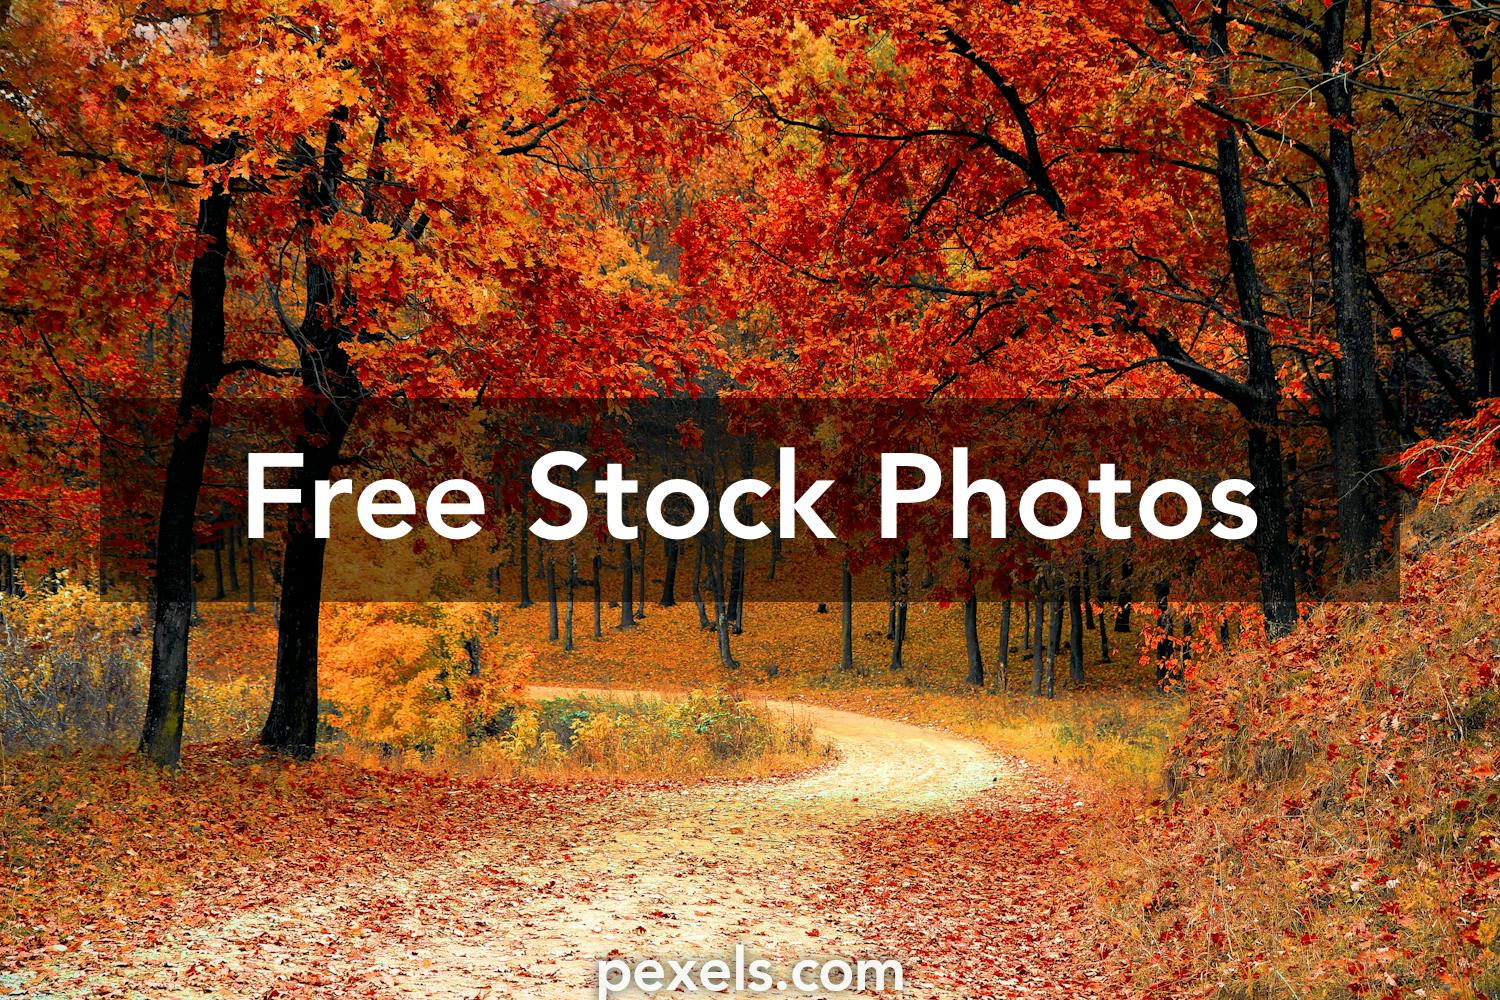 10 000 Best Screen Saver Photos 100 Free Download Pexels Stock Photos